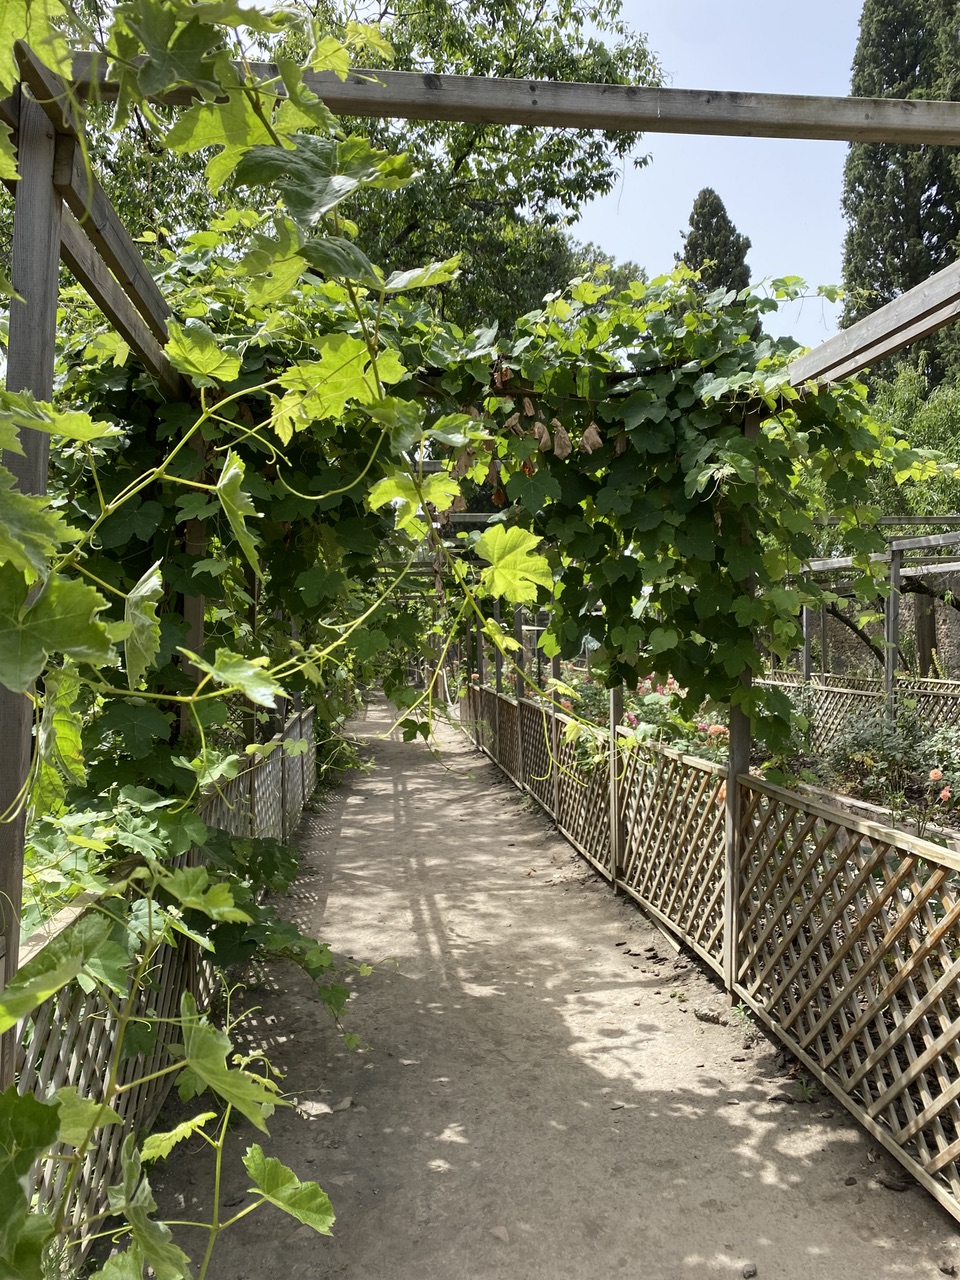 The gardens of Giulia Felice's inheritance